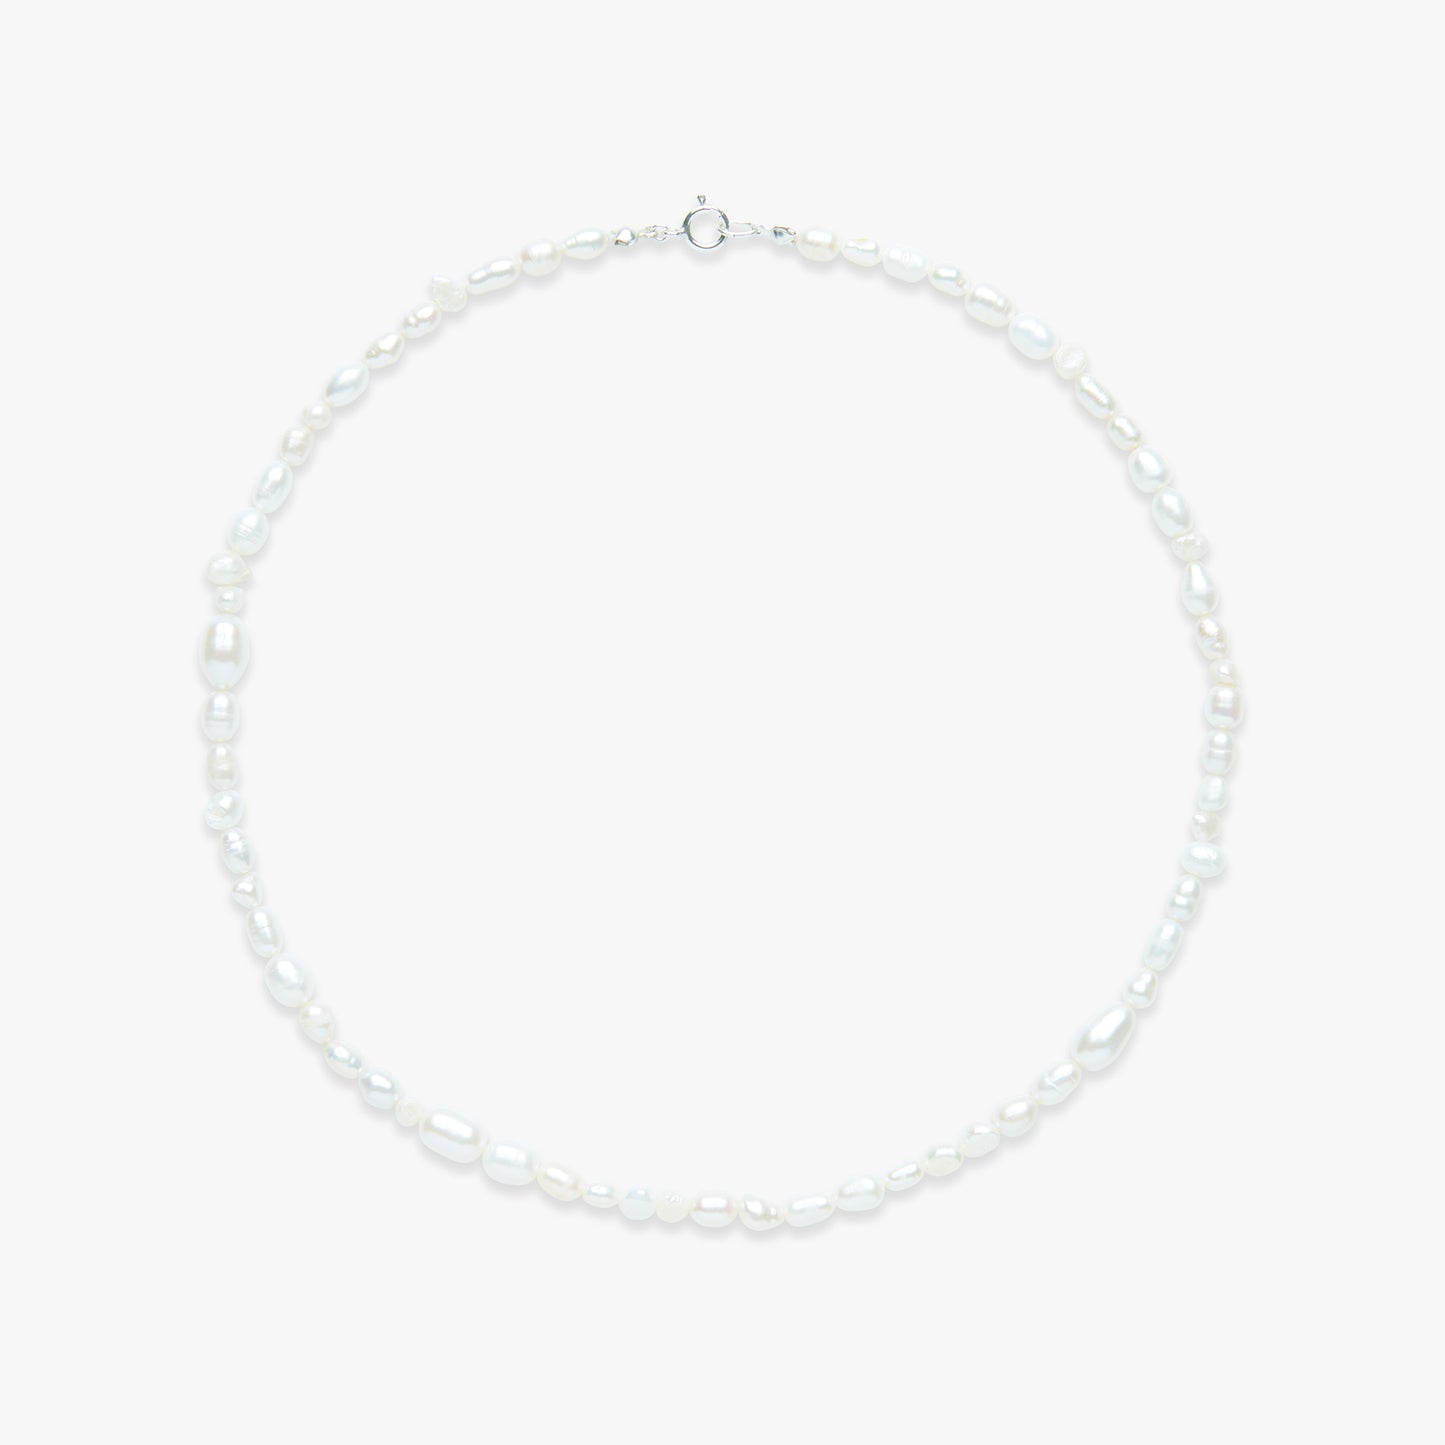 Stitch pearl necklace silver